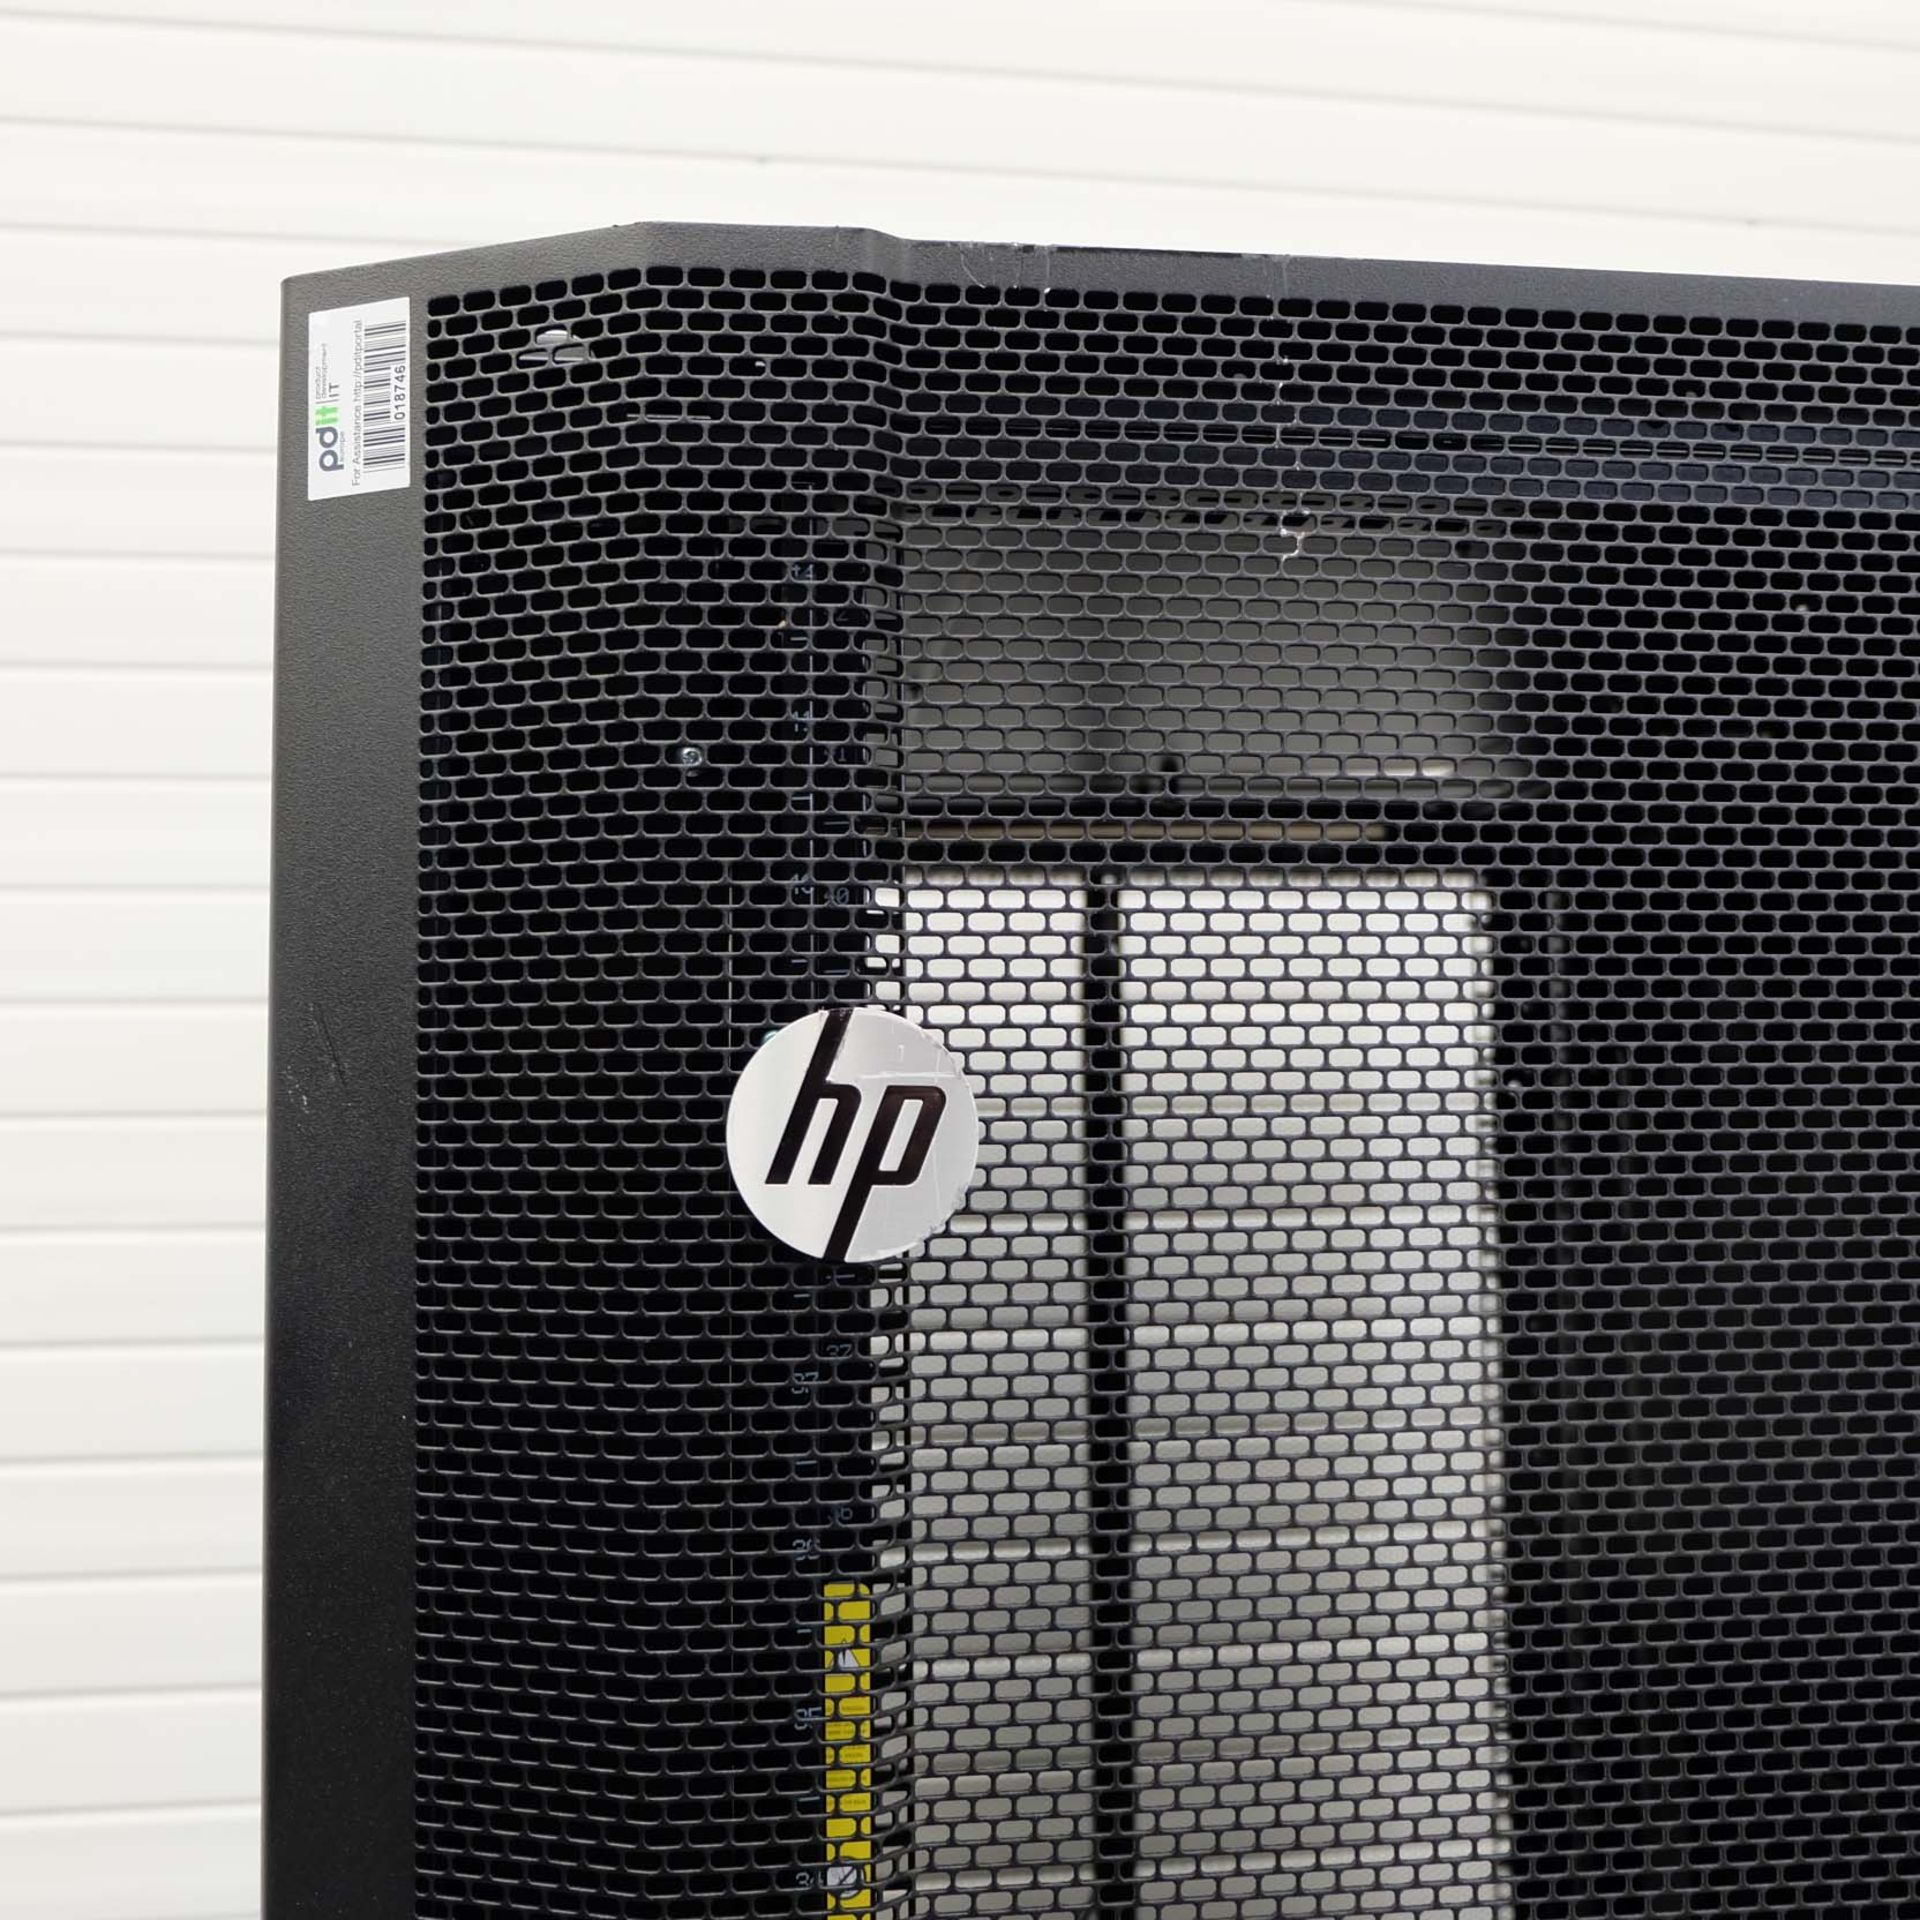 Hewlett Packard HP42U Enterprize Pallet Rack on Wheels. Size 800mm x 1075mm. Height 2000mm. Year 201 - Image 9 of 10